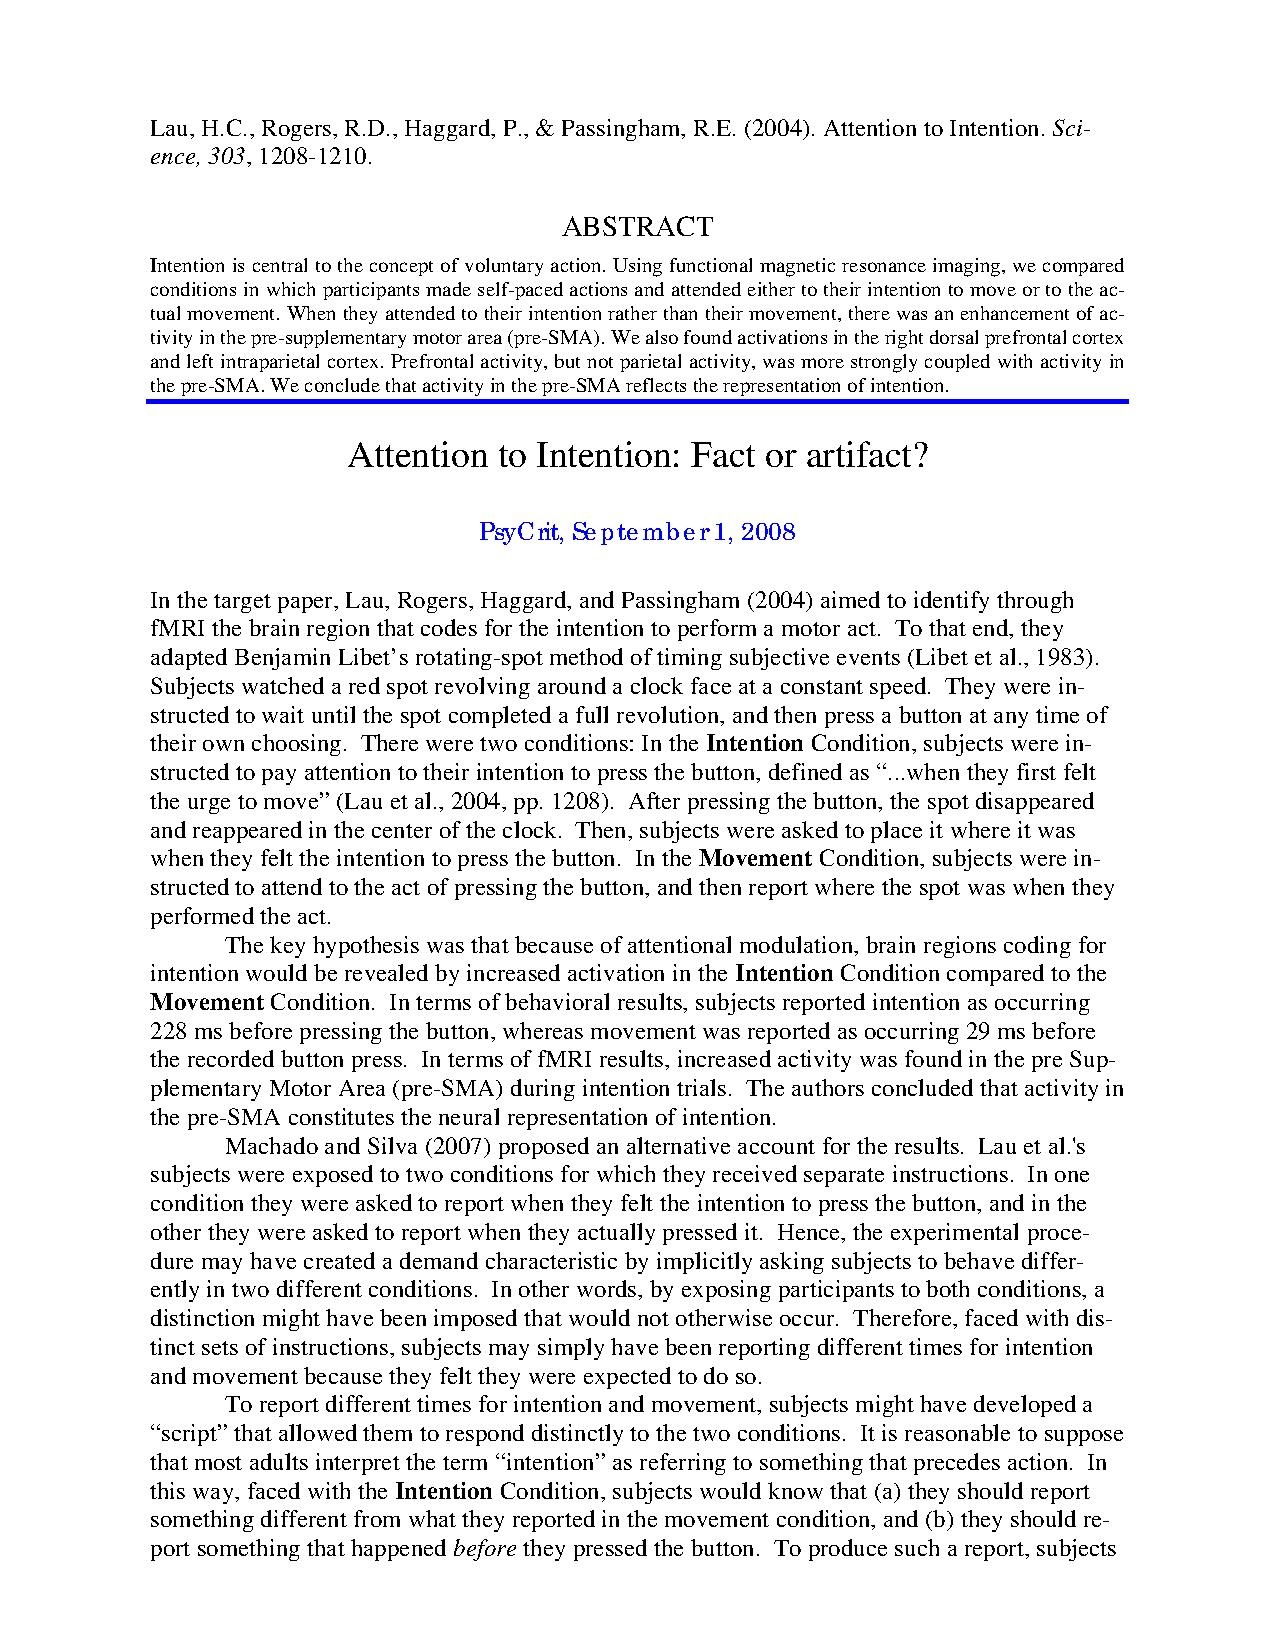 SmithMachado.Lau.et.al 2008.pdf